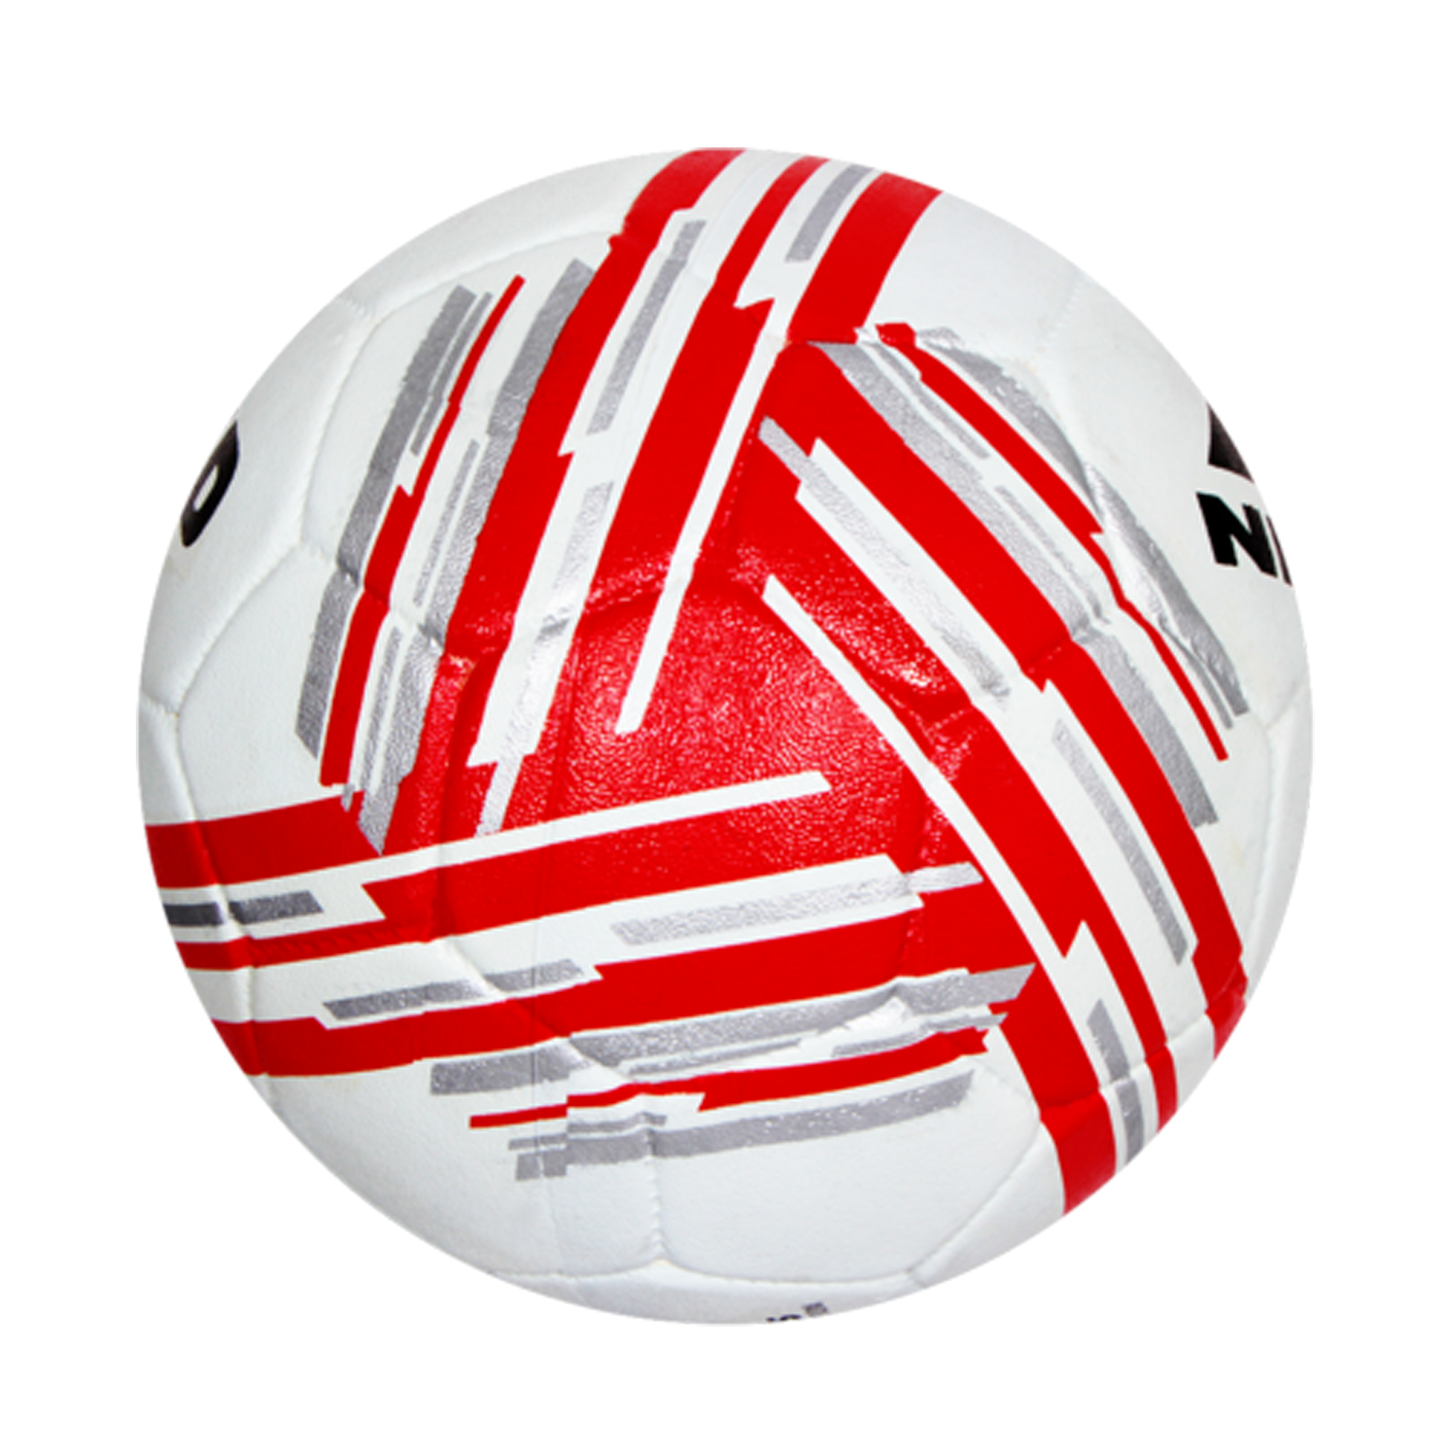 Nivia England Country Colour Football, Multi Colour - Size 5 - Best Price online Prokicksports.com